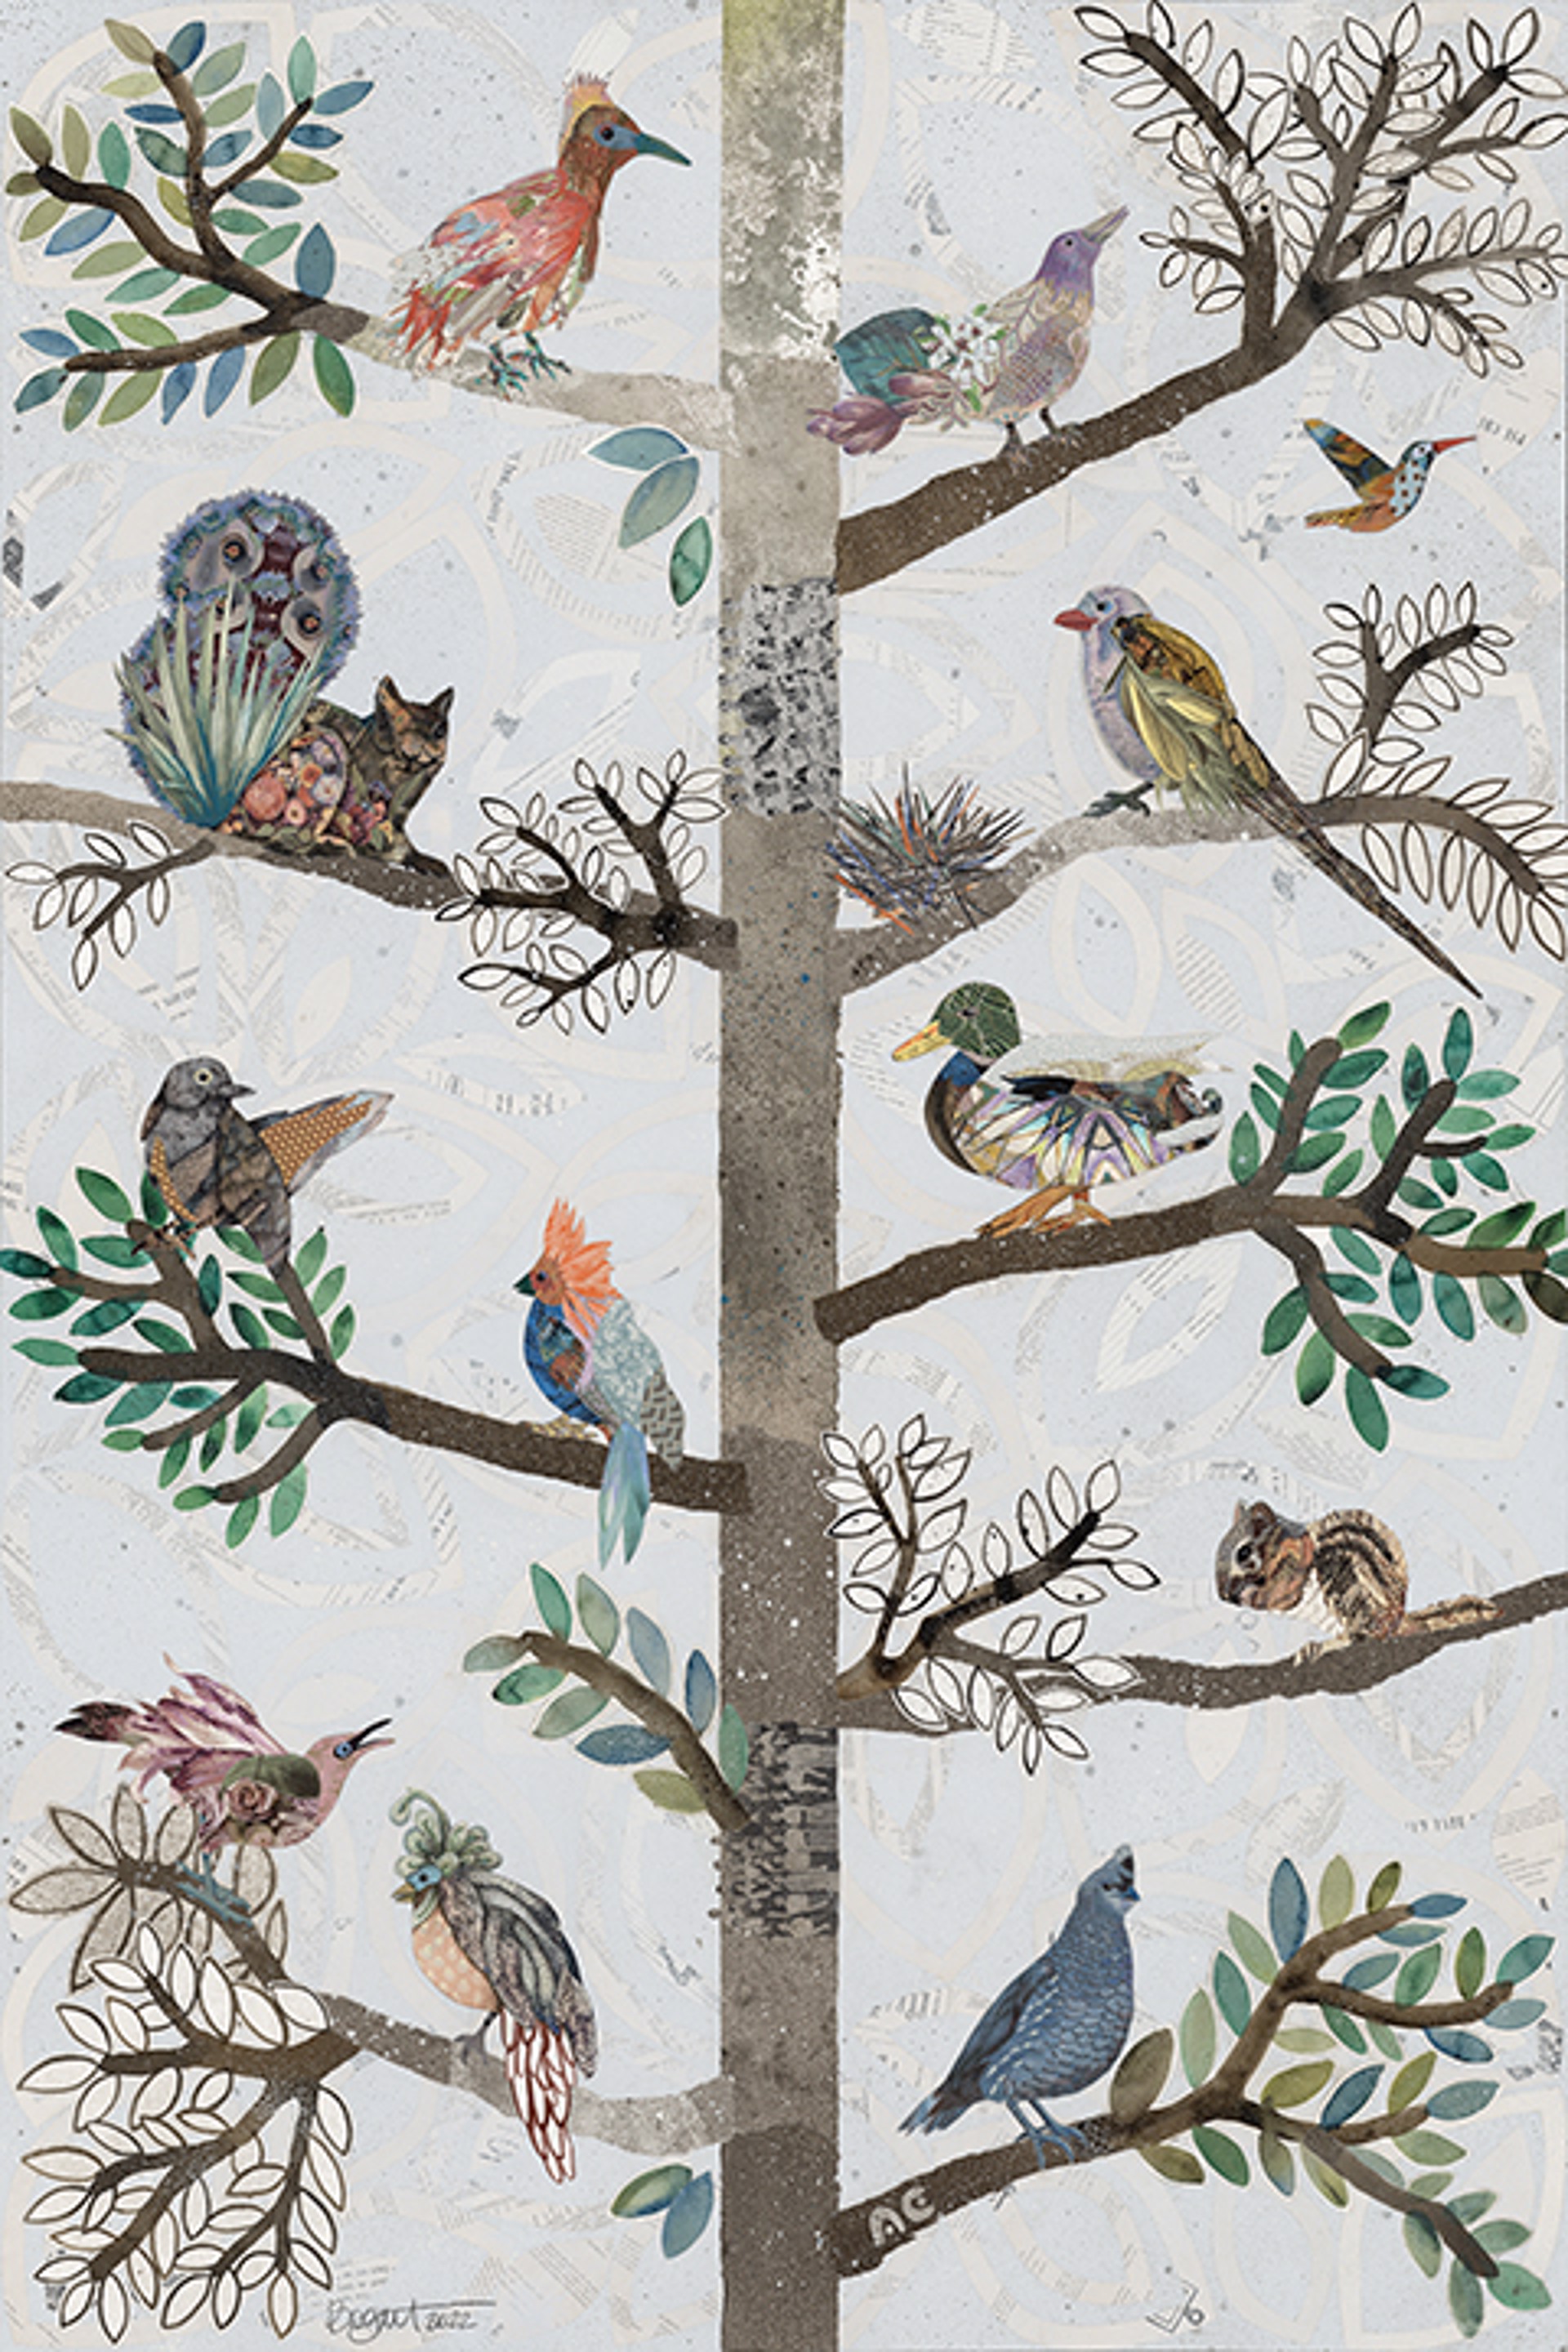 Tree of Life 10 by Brenda Bogart - Prints